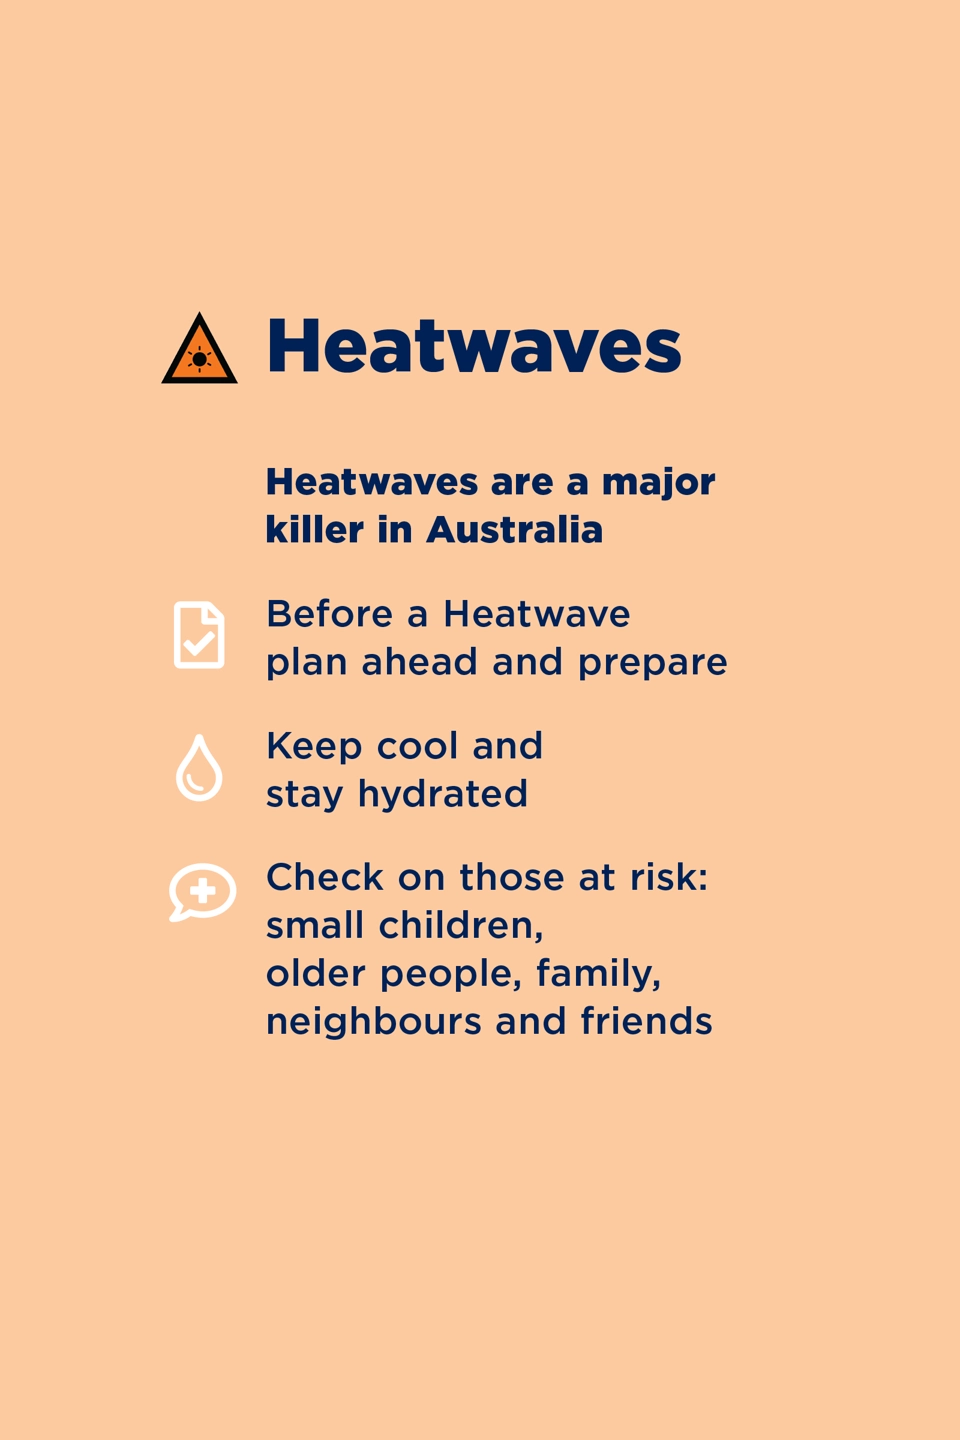 South Australian Country Fire Service (SACFS) - display panel - heatwaves